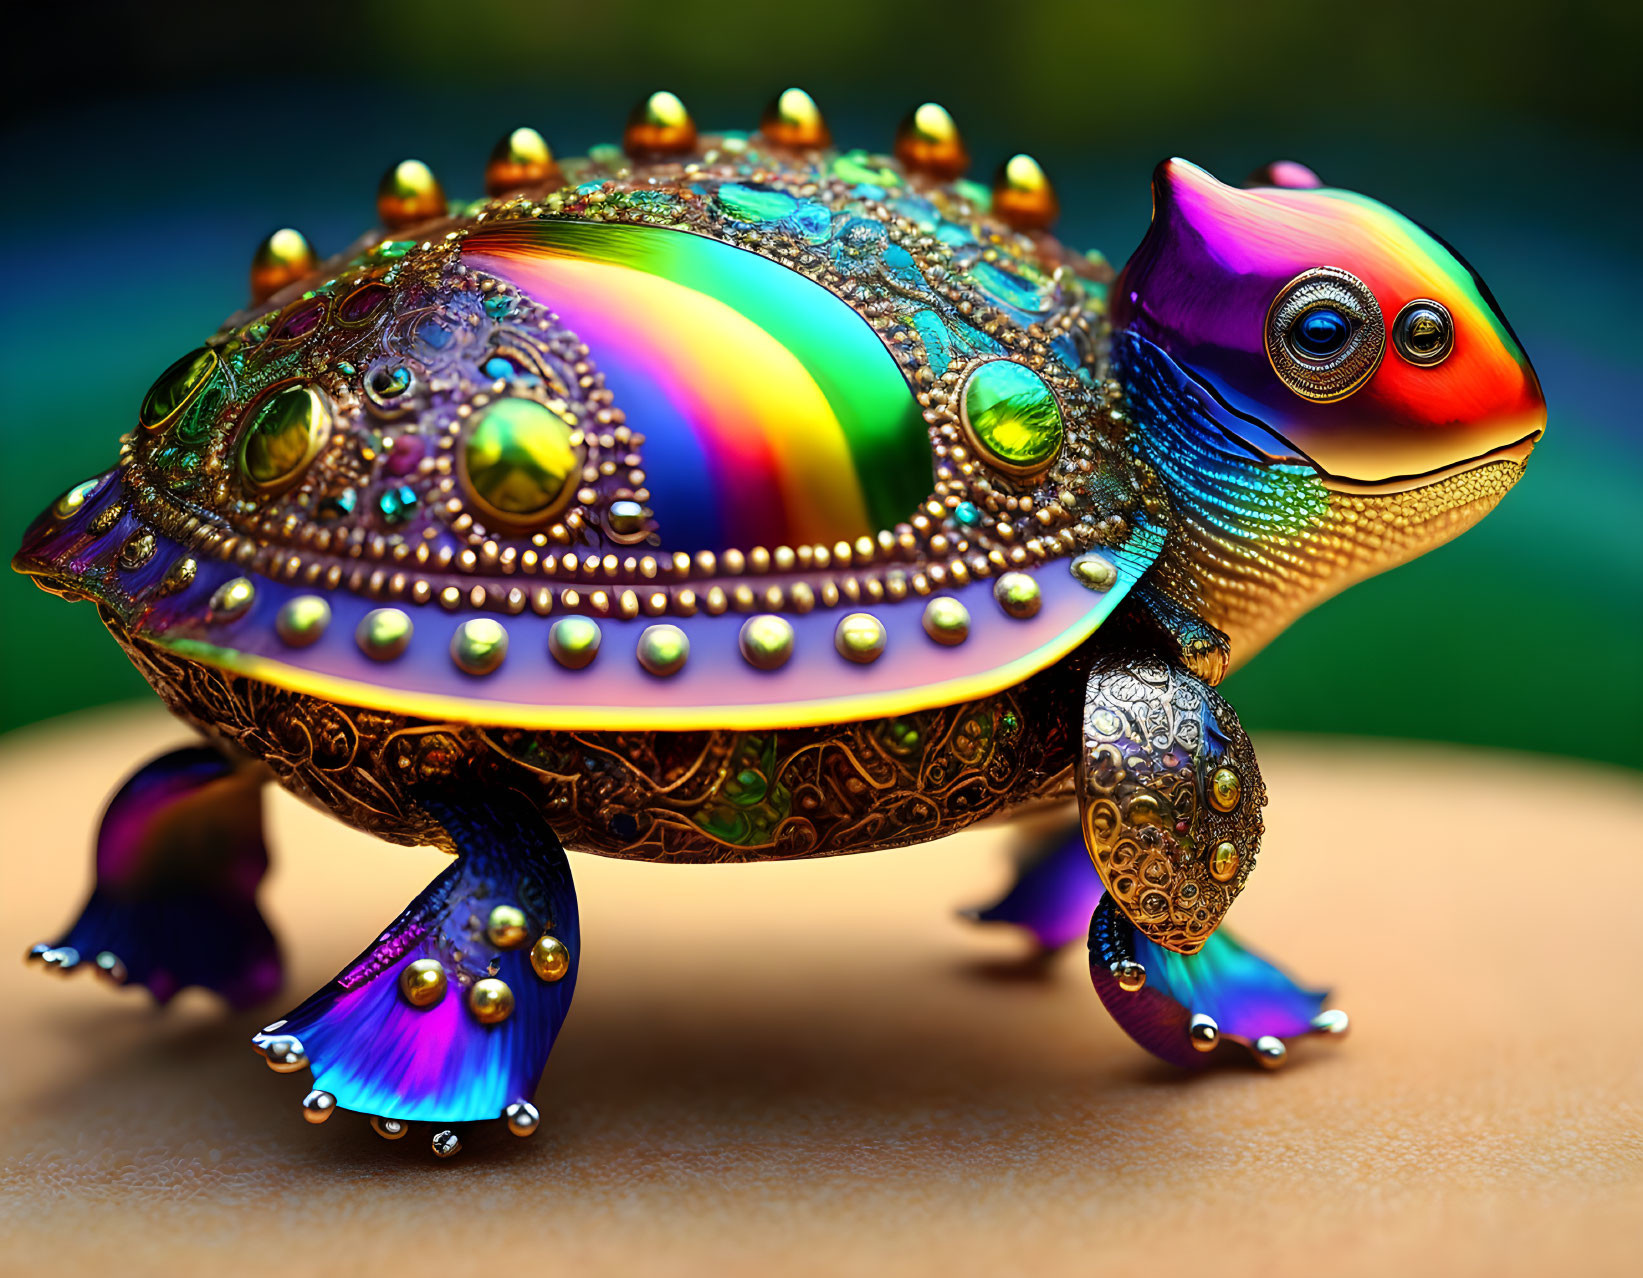 Colorful Ornate Turtle Figurine with Pearl-like Embellishments